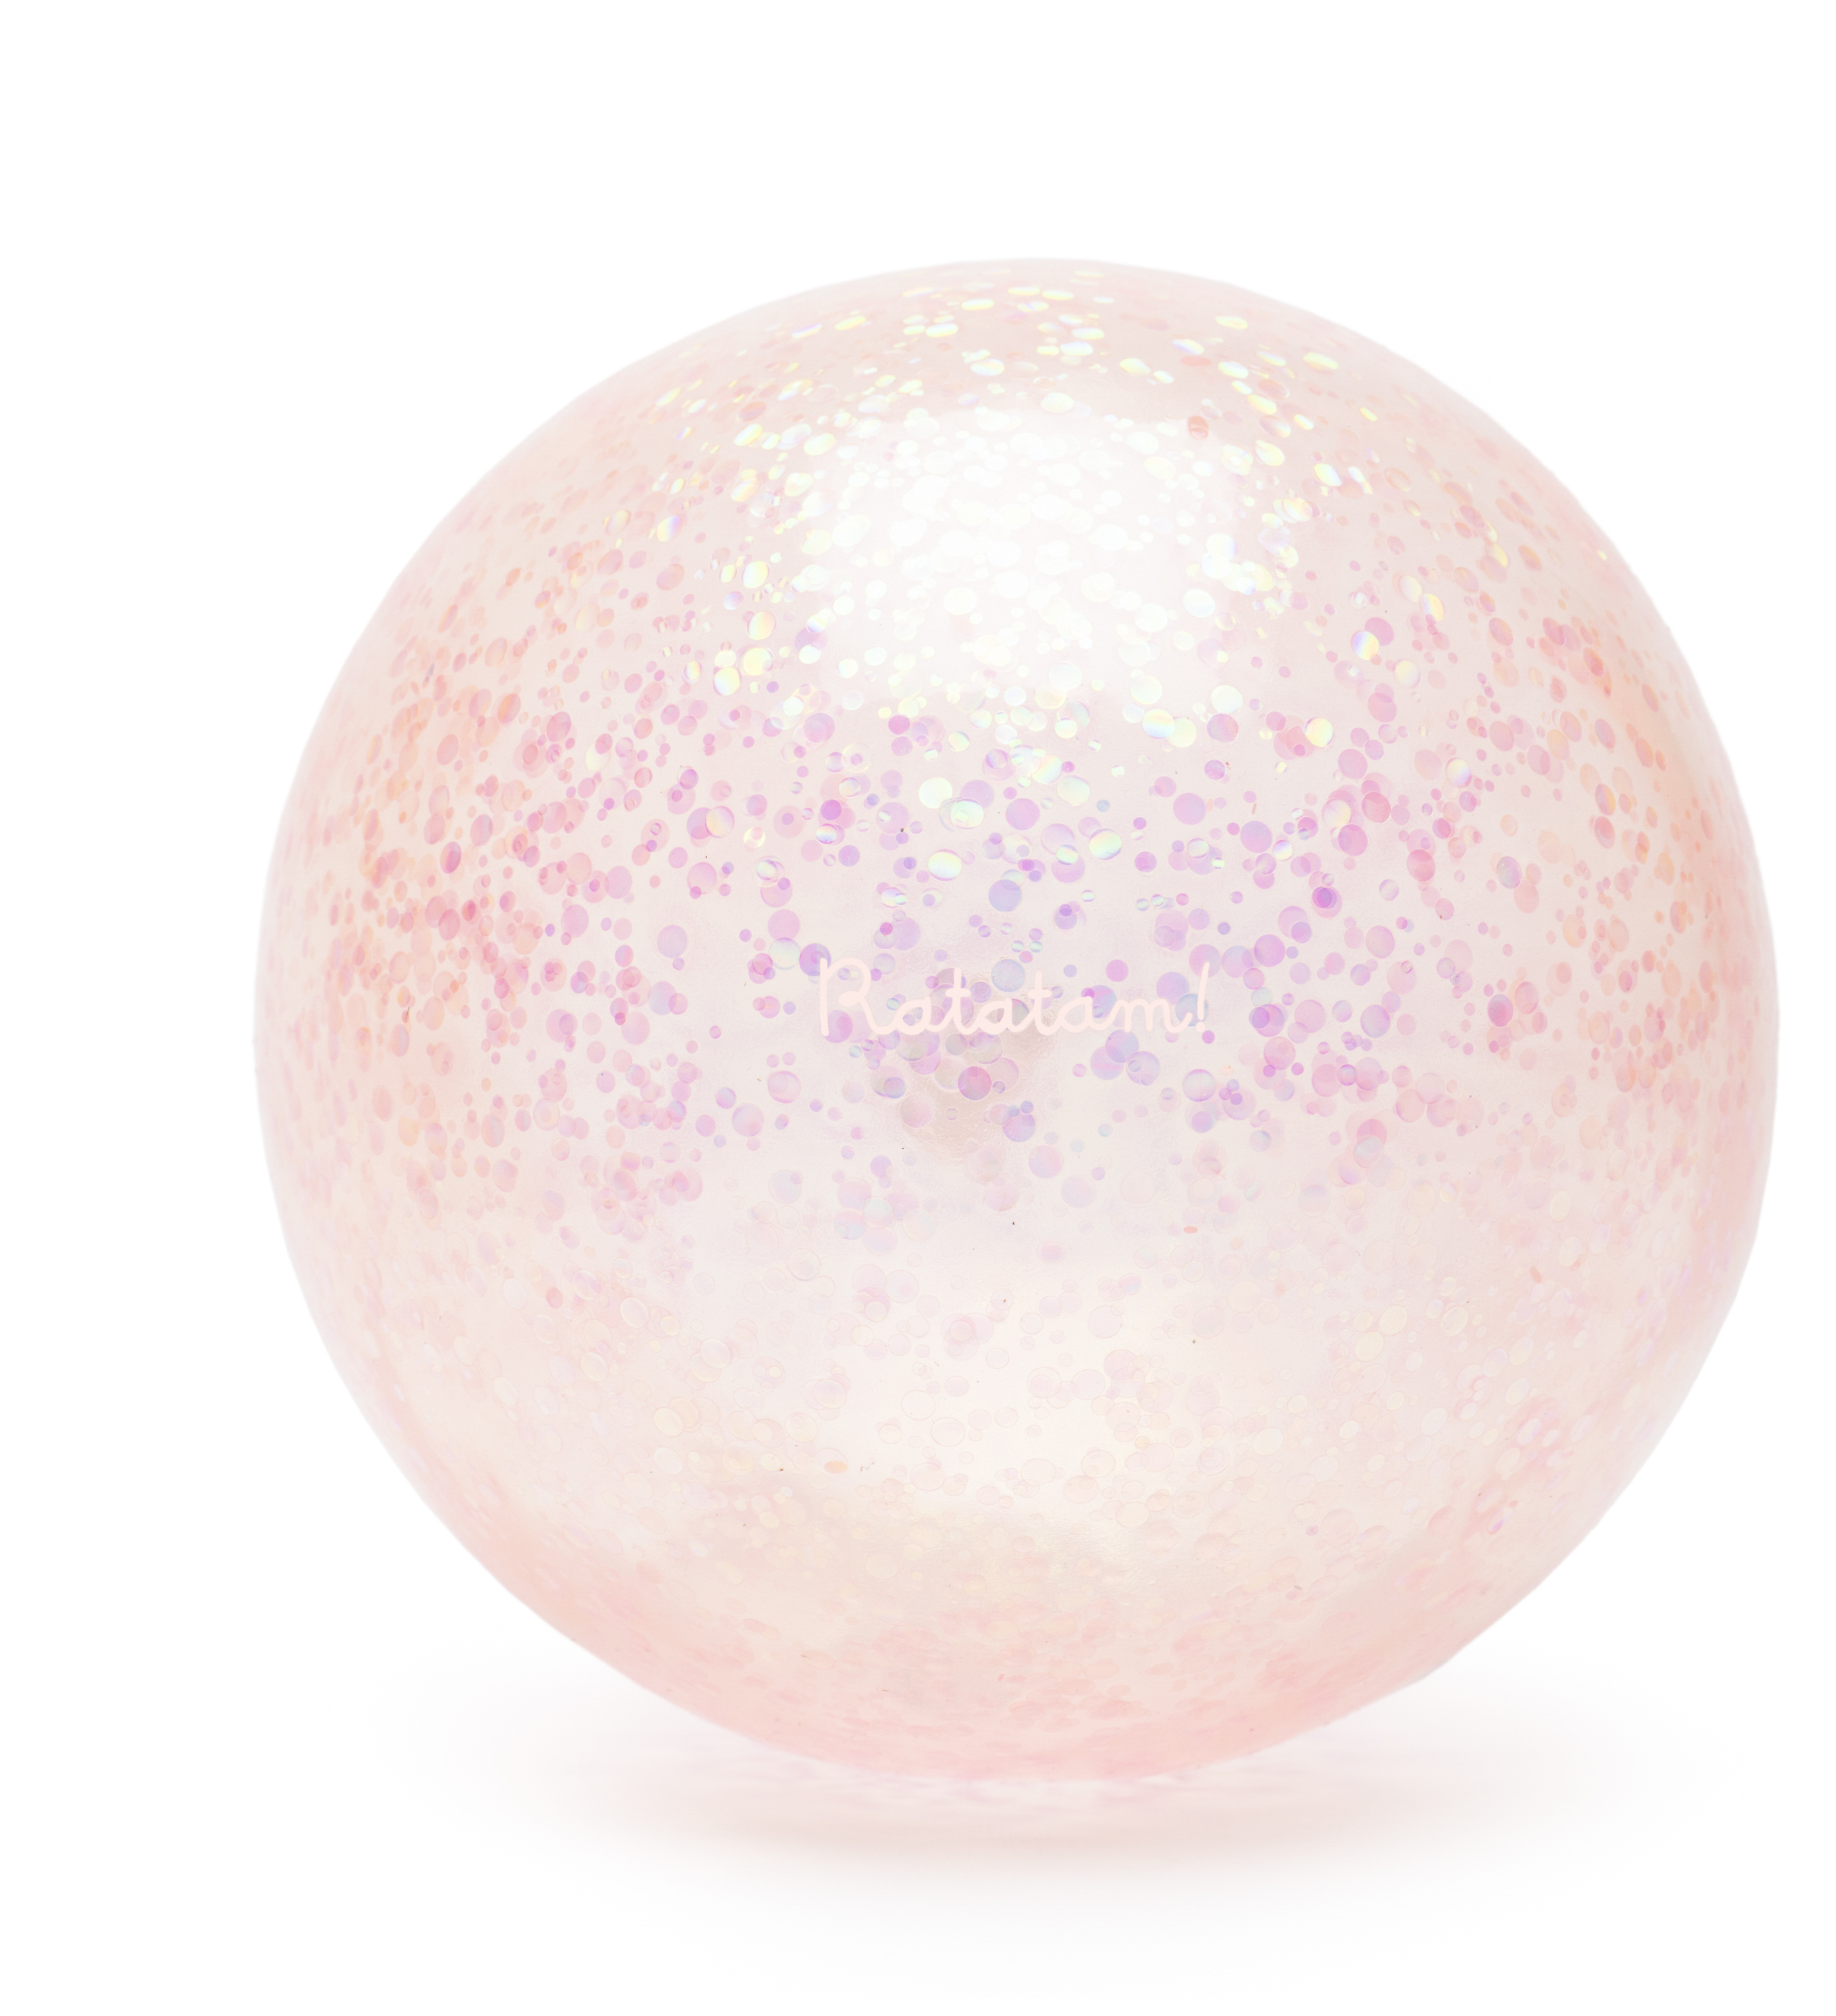 Ratatam Bubble Ball pink 10cm